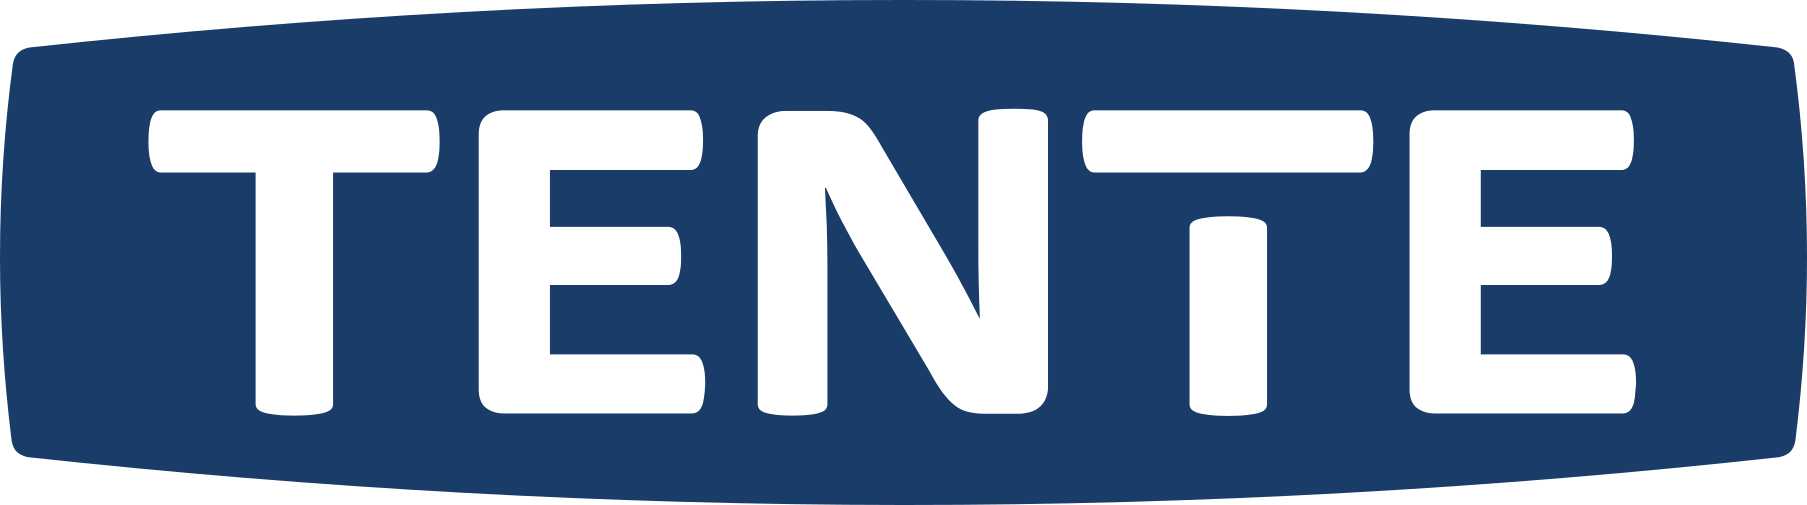 Logo_TENTE.png